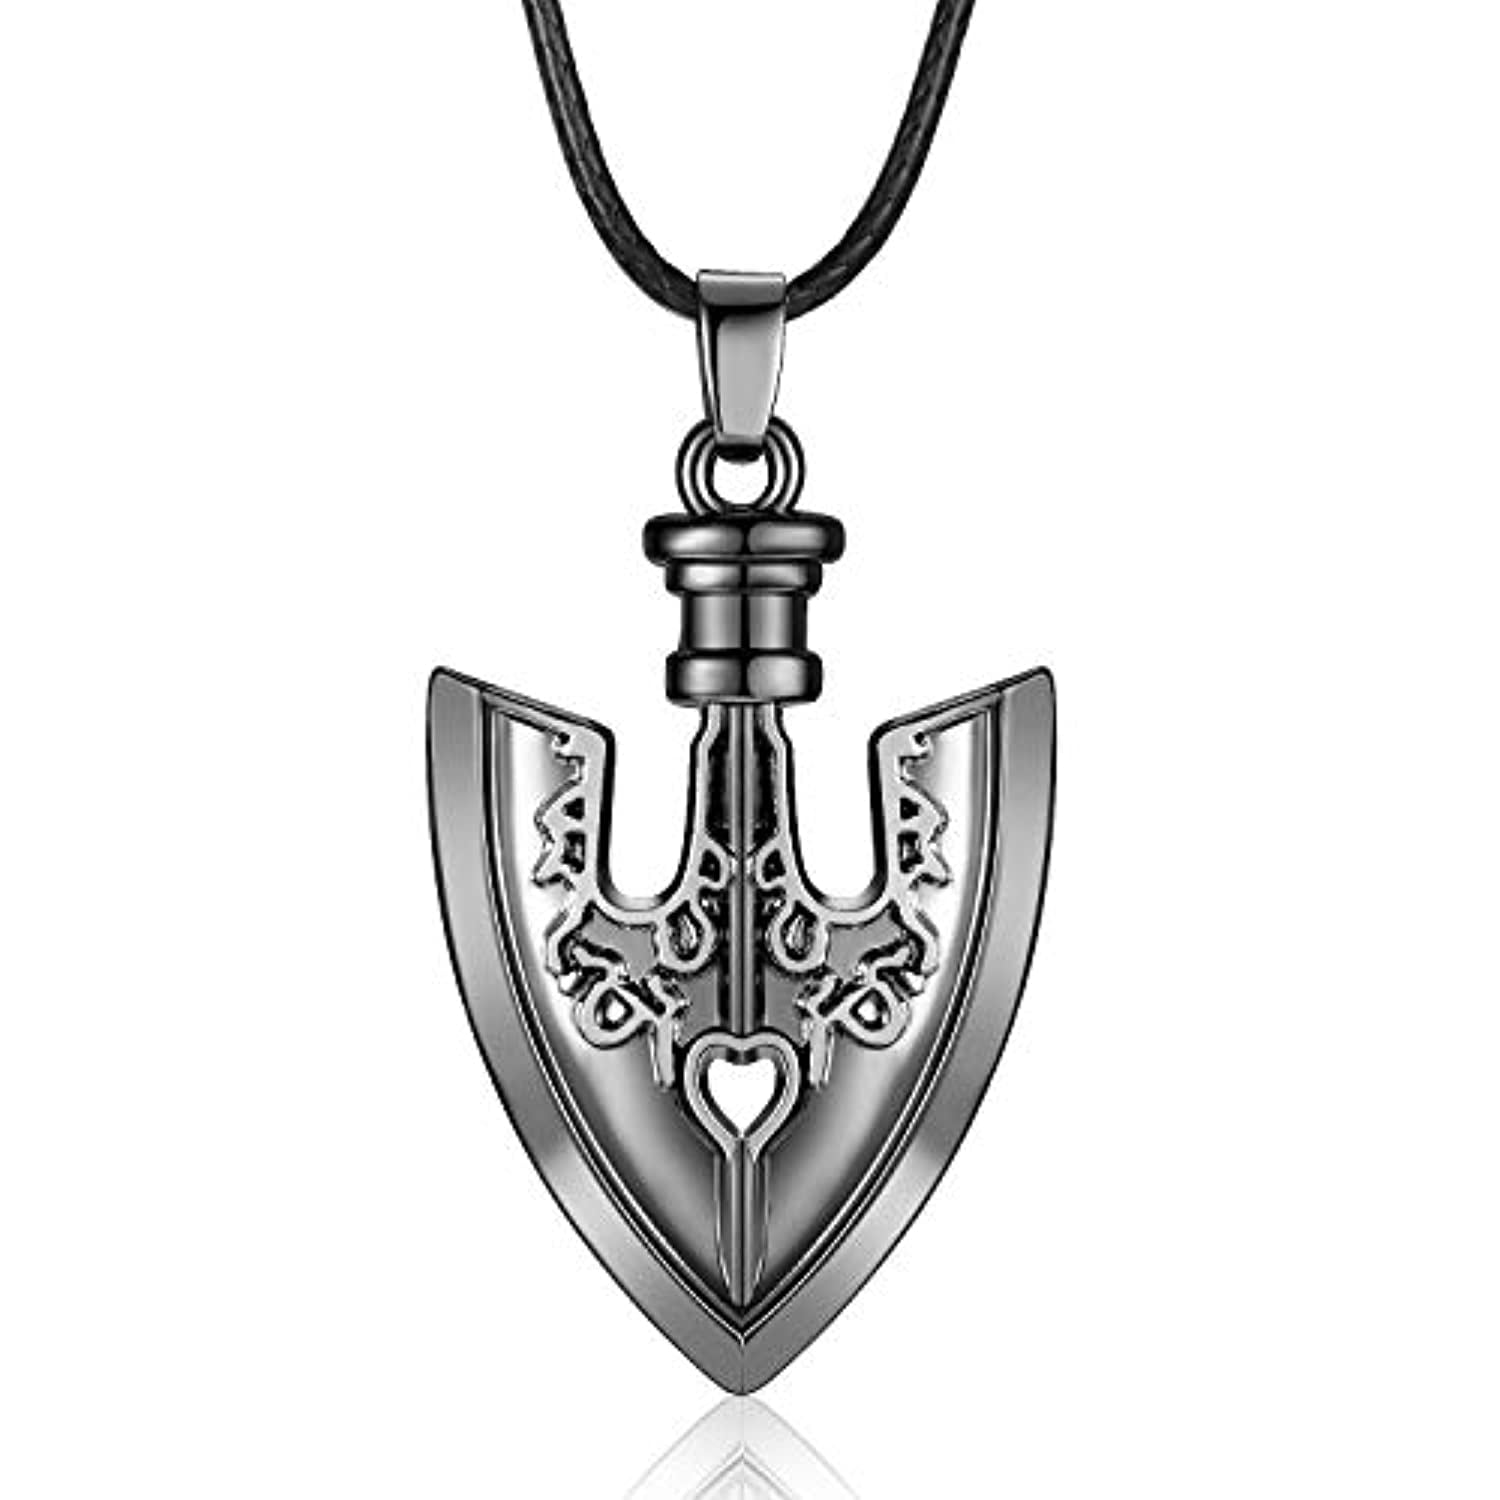 Details 163+ requiem arrow necklace